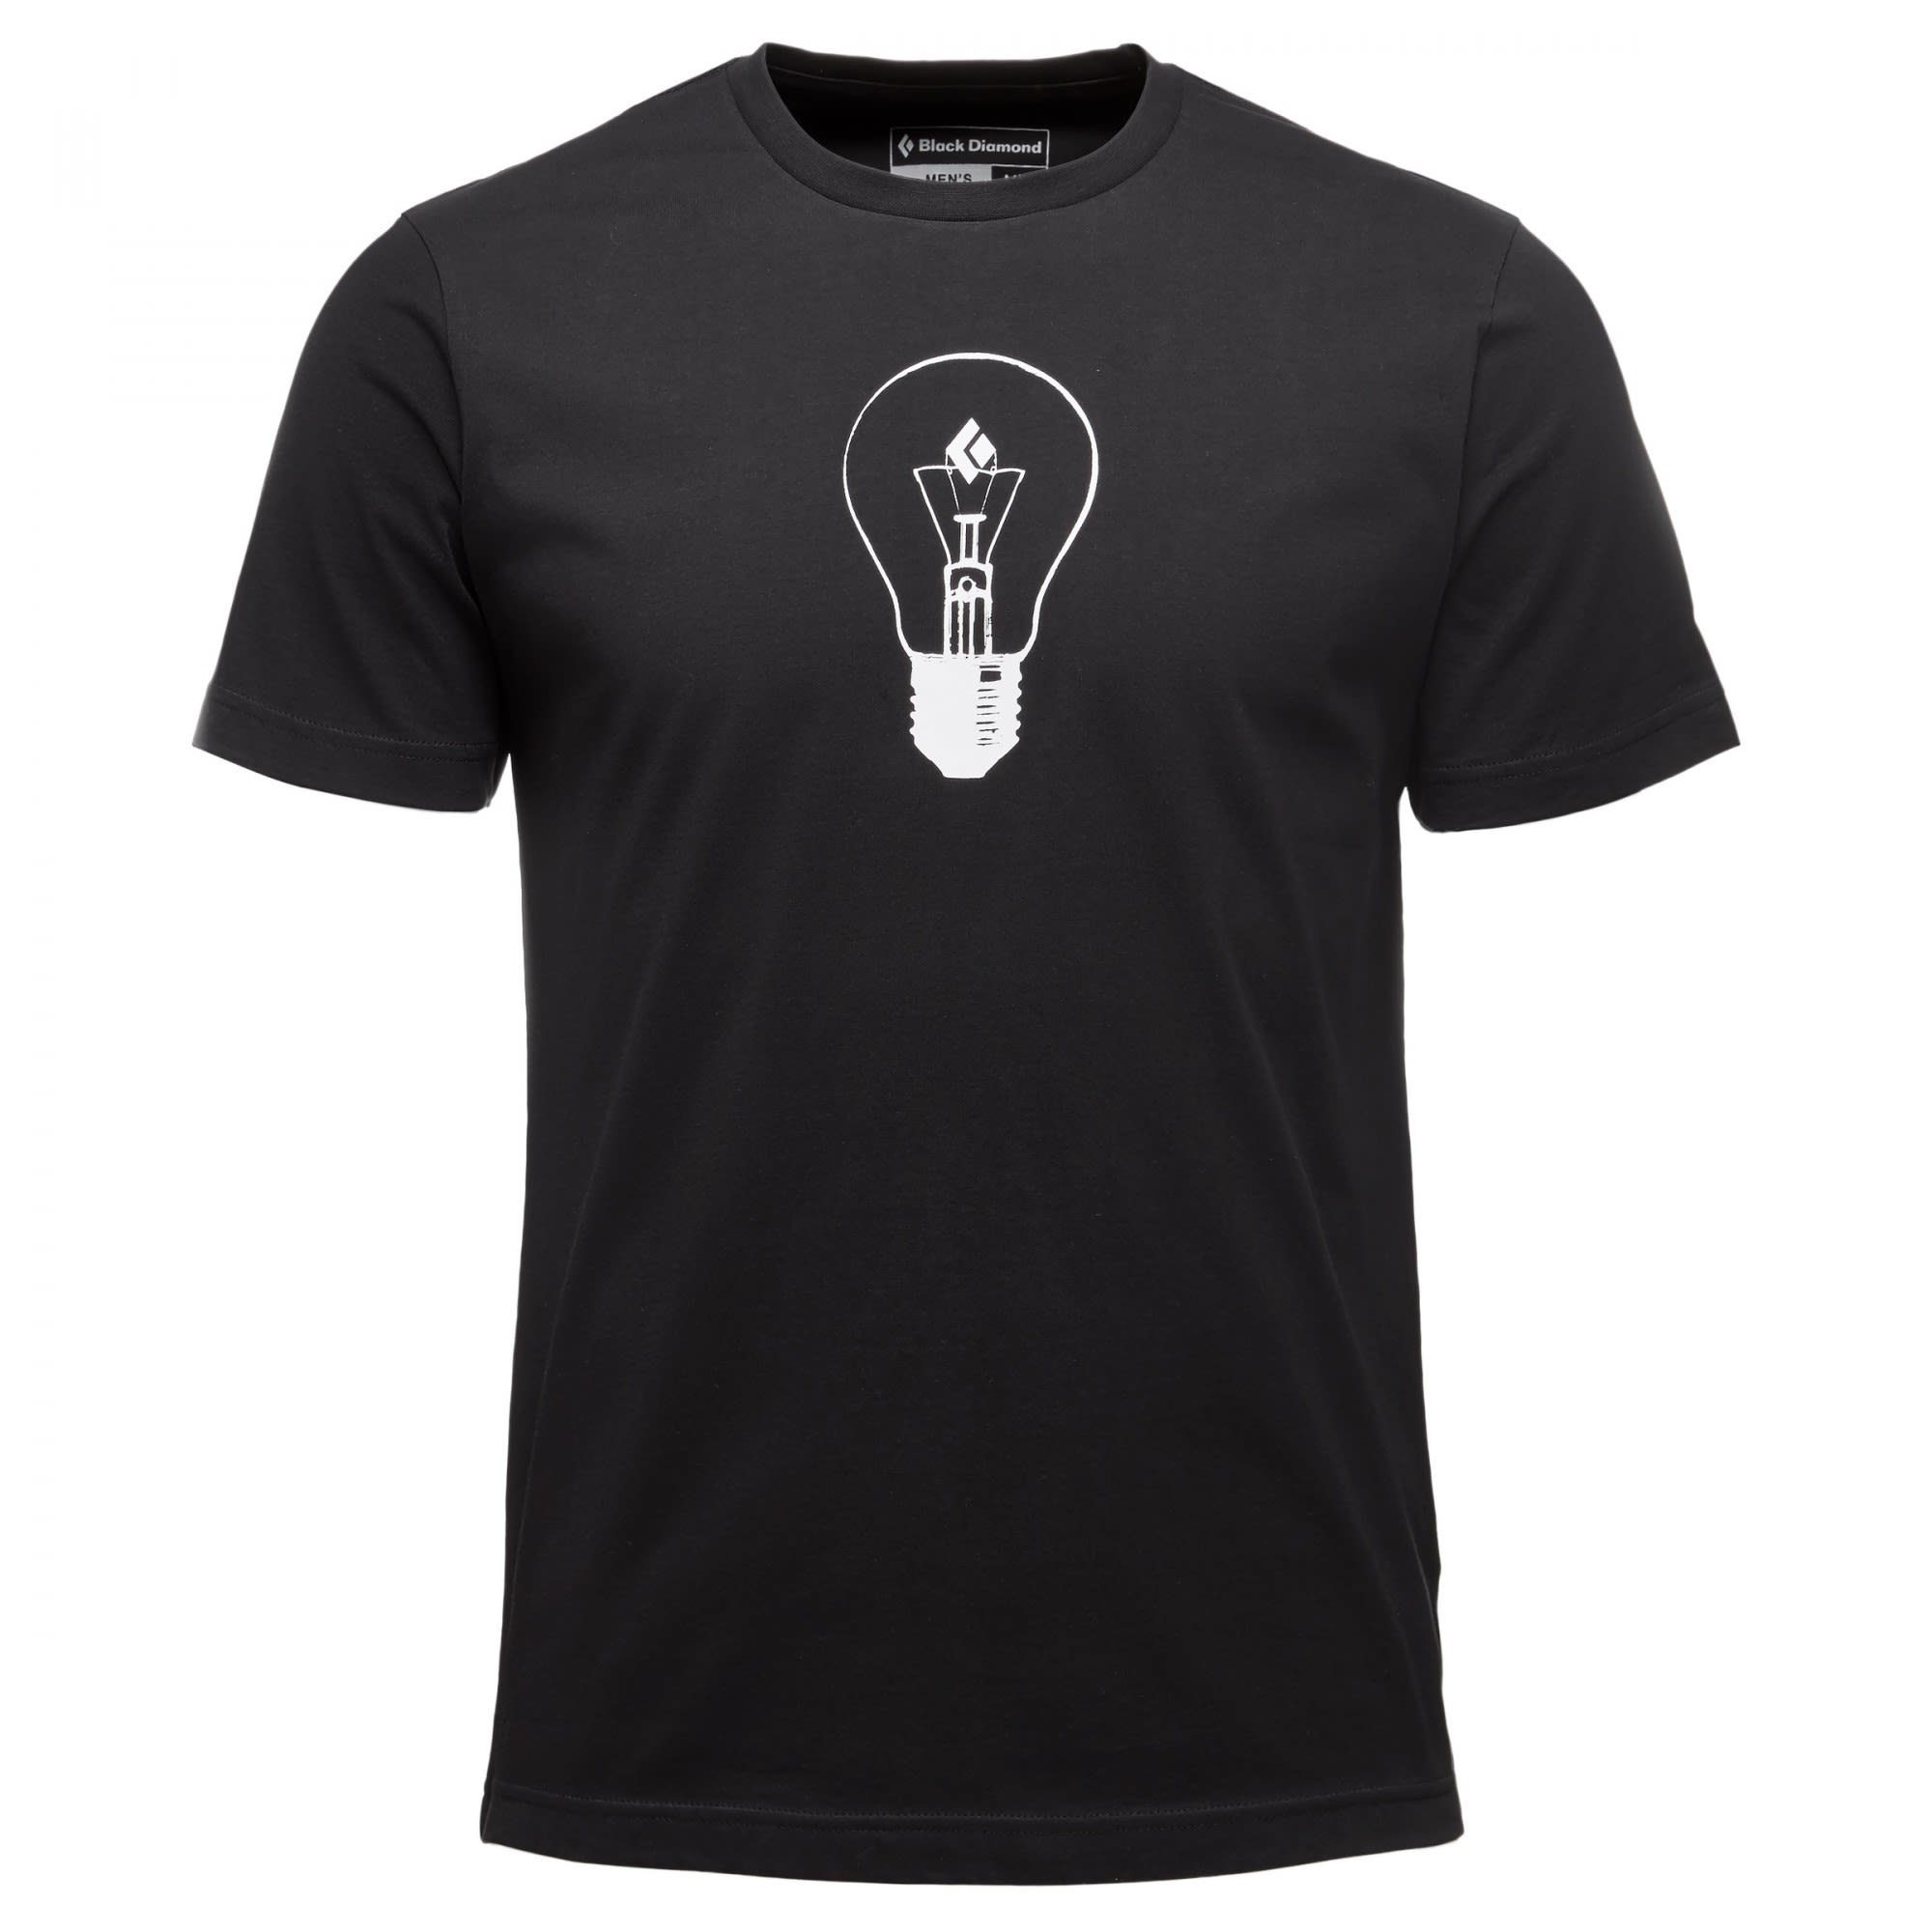 M Idea Diamond Black Kurzarm-Shirt Black Tee T-Shirt Diamond S/s Herren